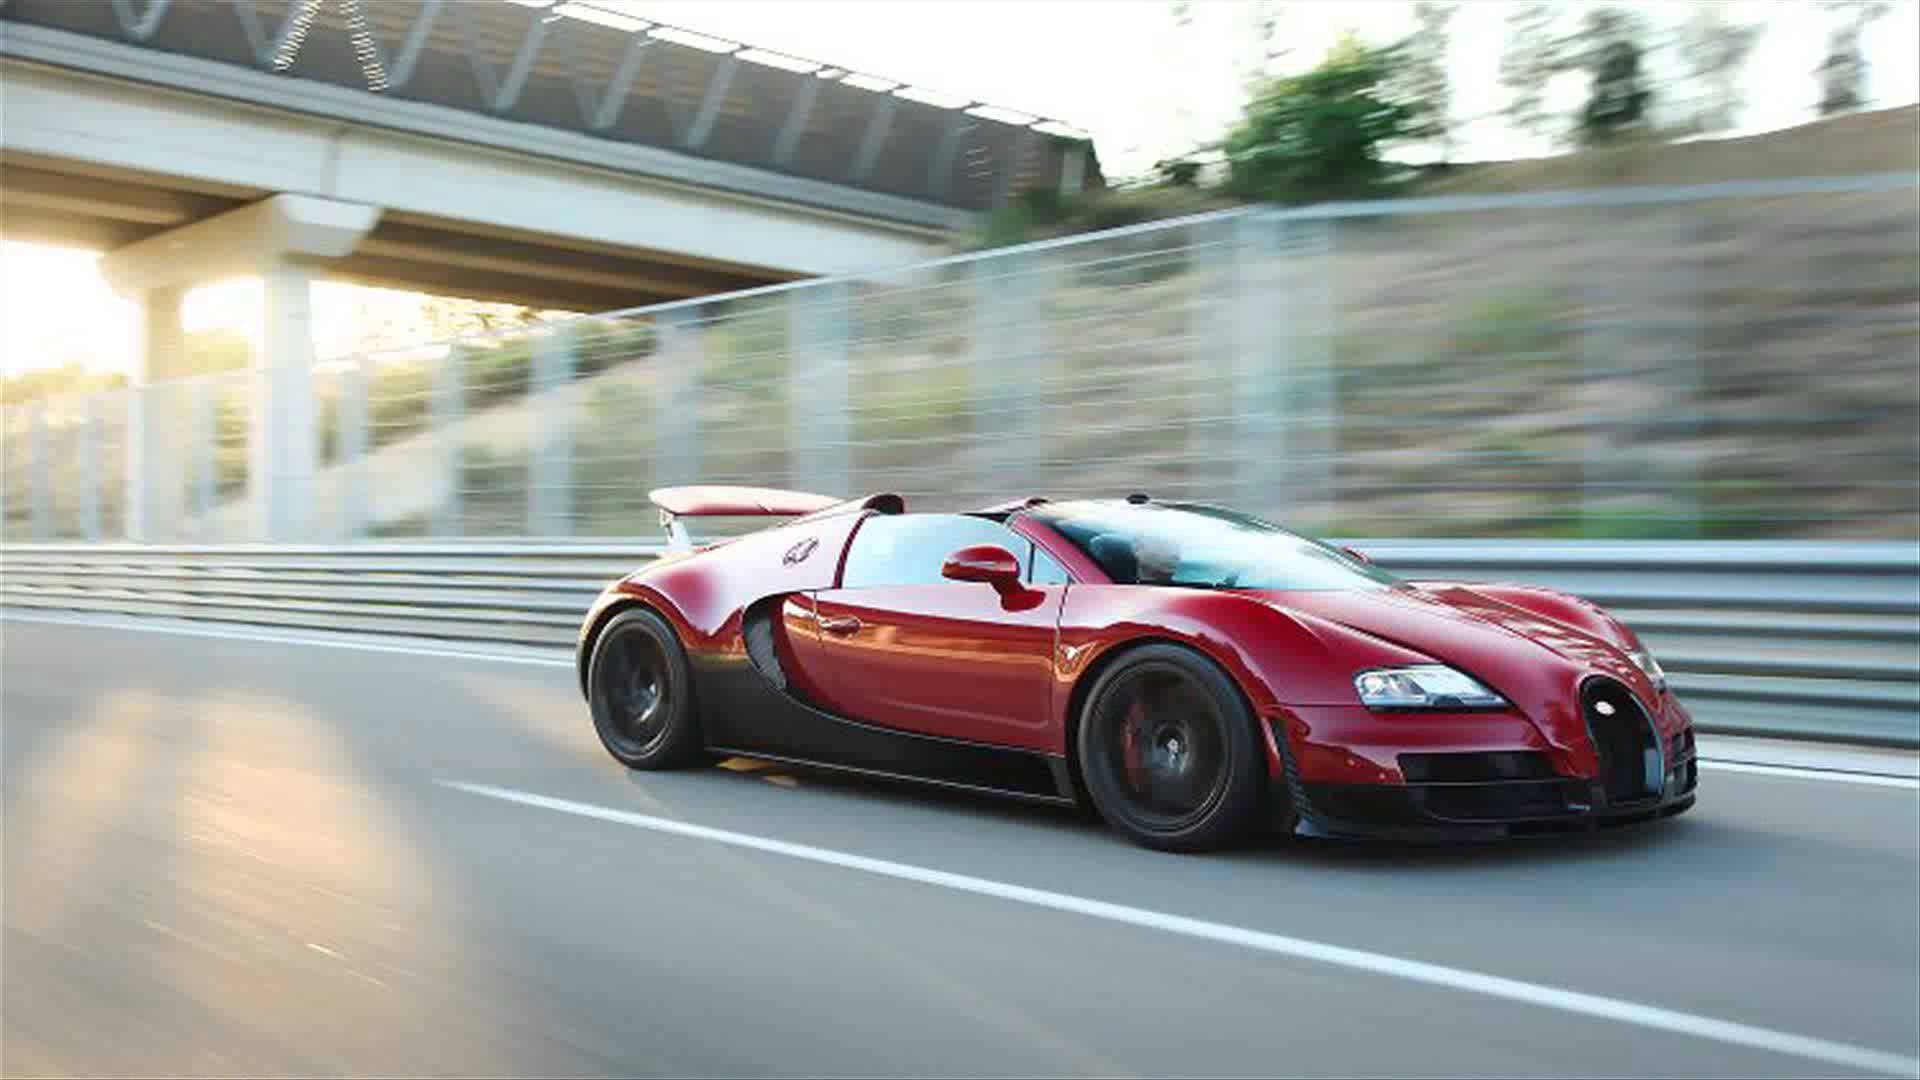 Bugatti Veyron Grand Sport Vitesse Backgrounds on Wallpapers Vista